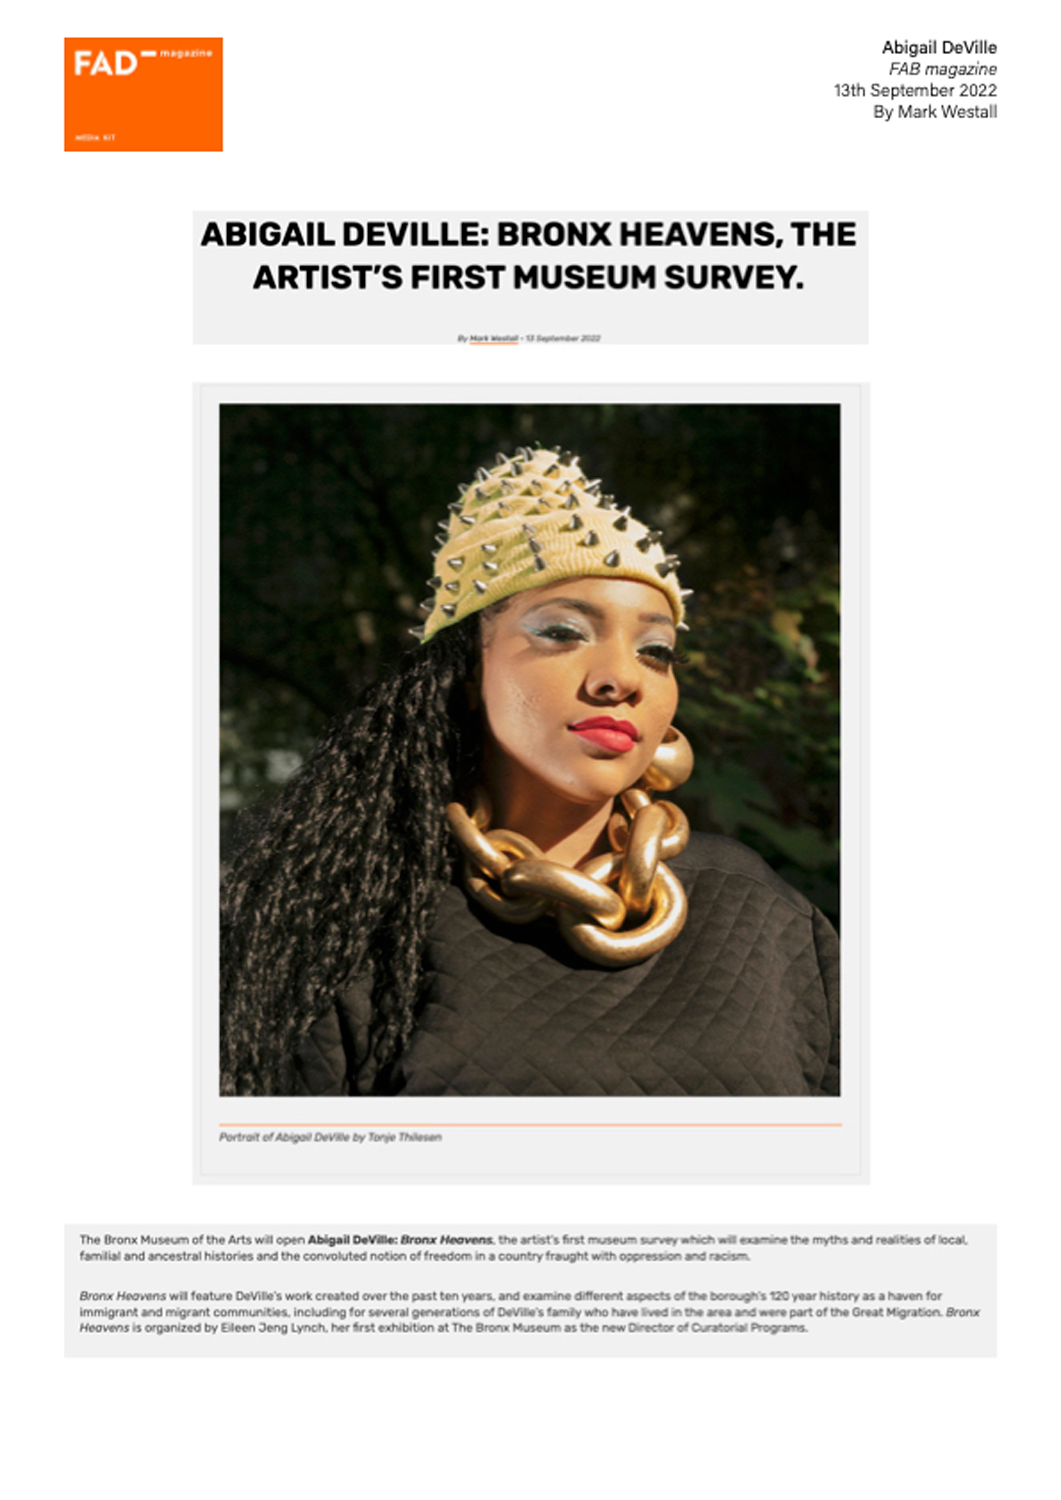 Abigail DeVille: Bronx Heavens, the artist's first museum survey. - FAB magazine